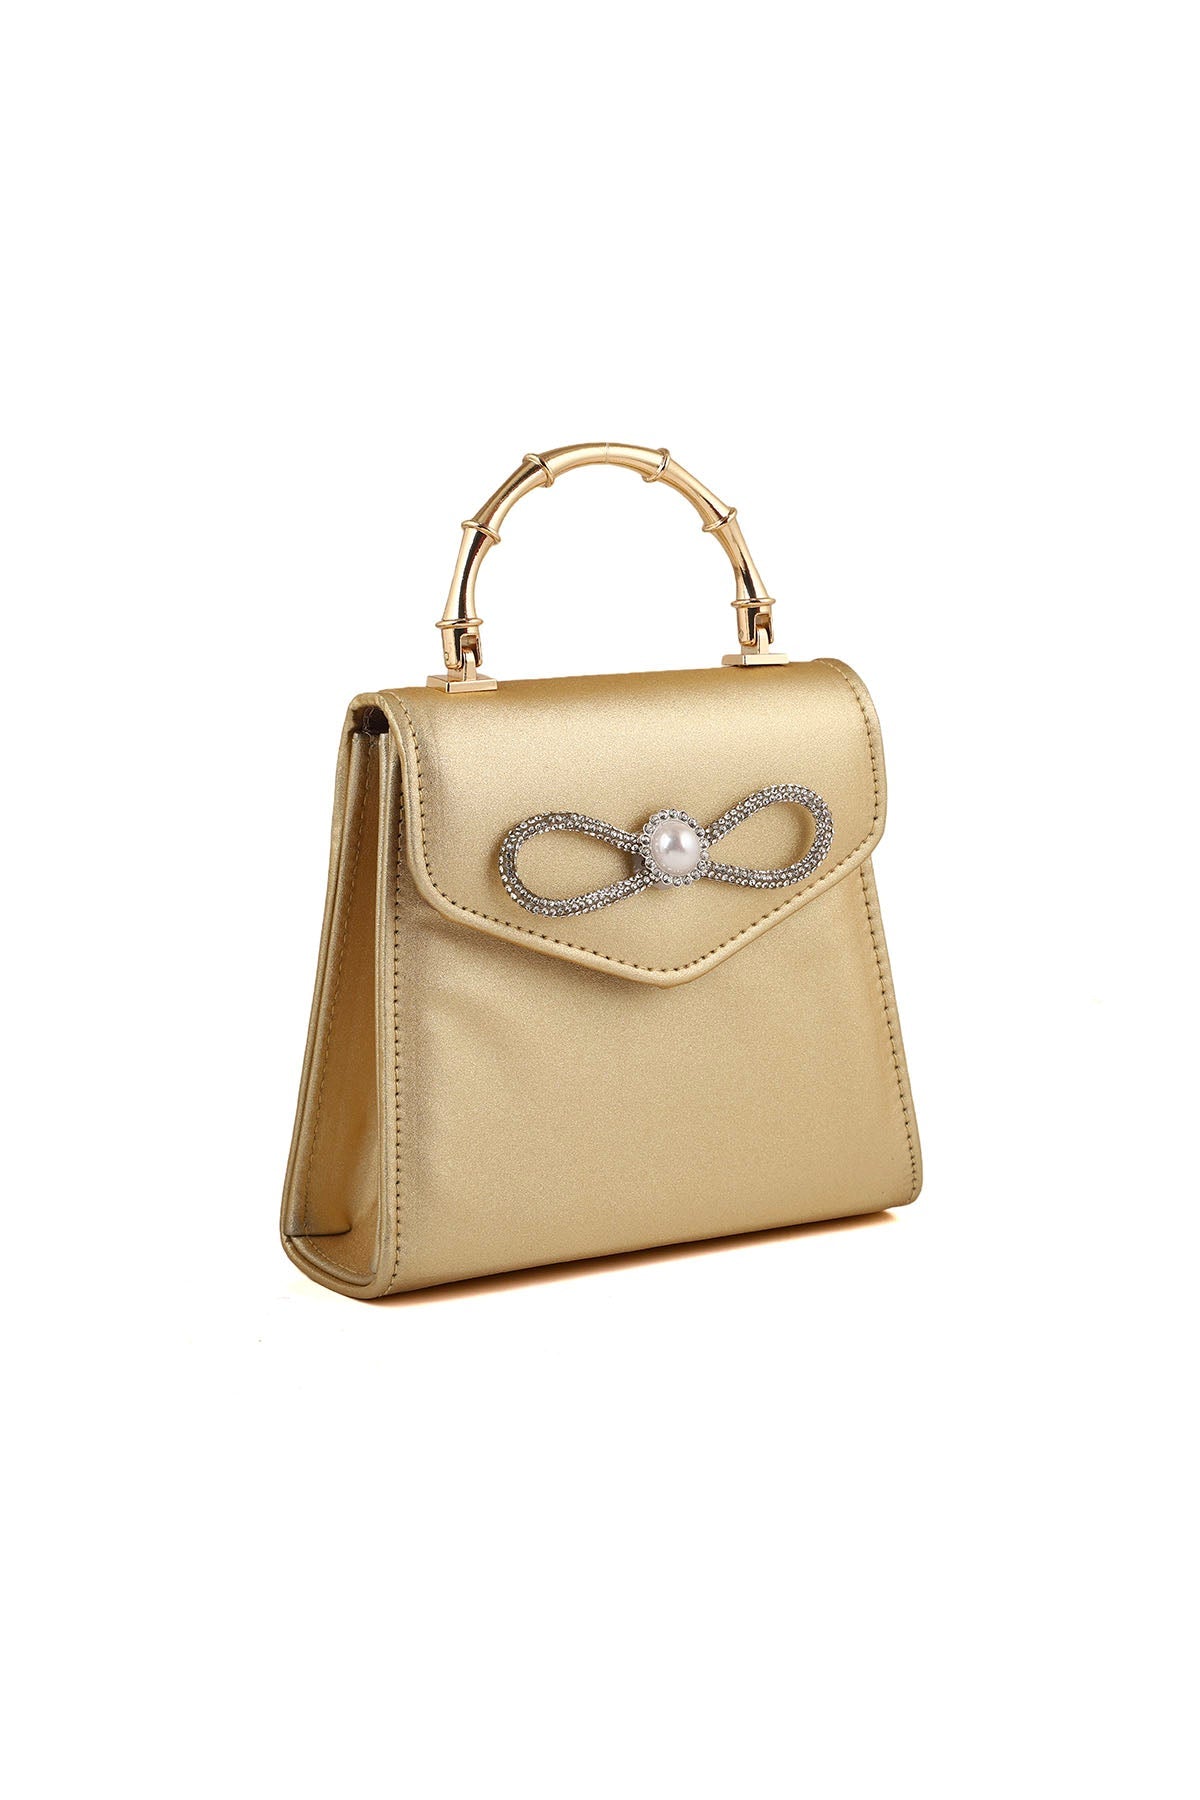 Top Handle Hand Bags B21592-Golden – Insignia PK